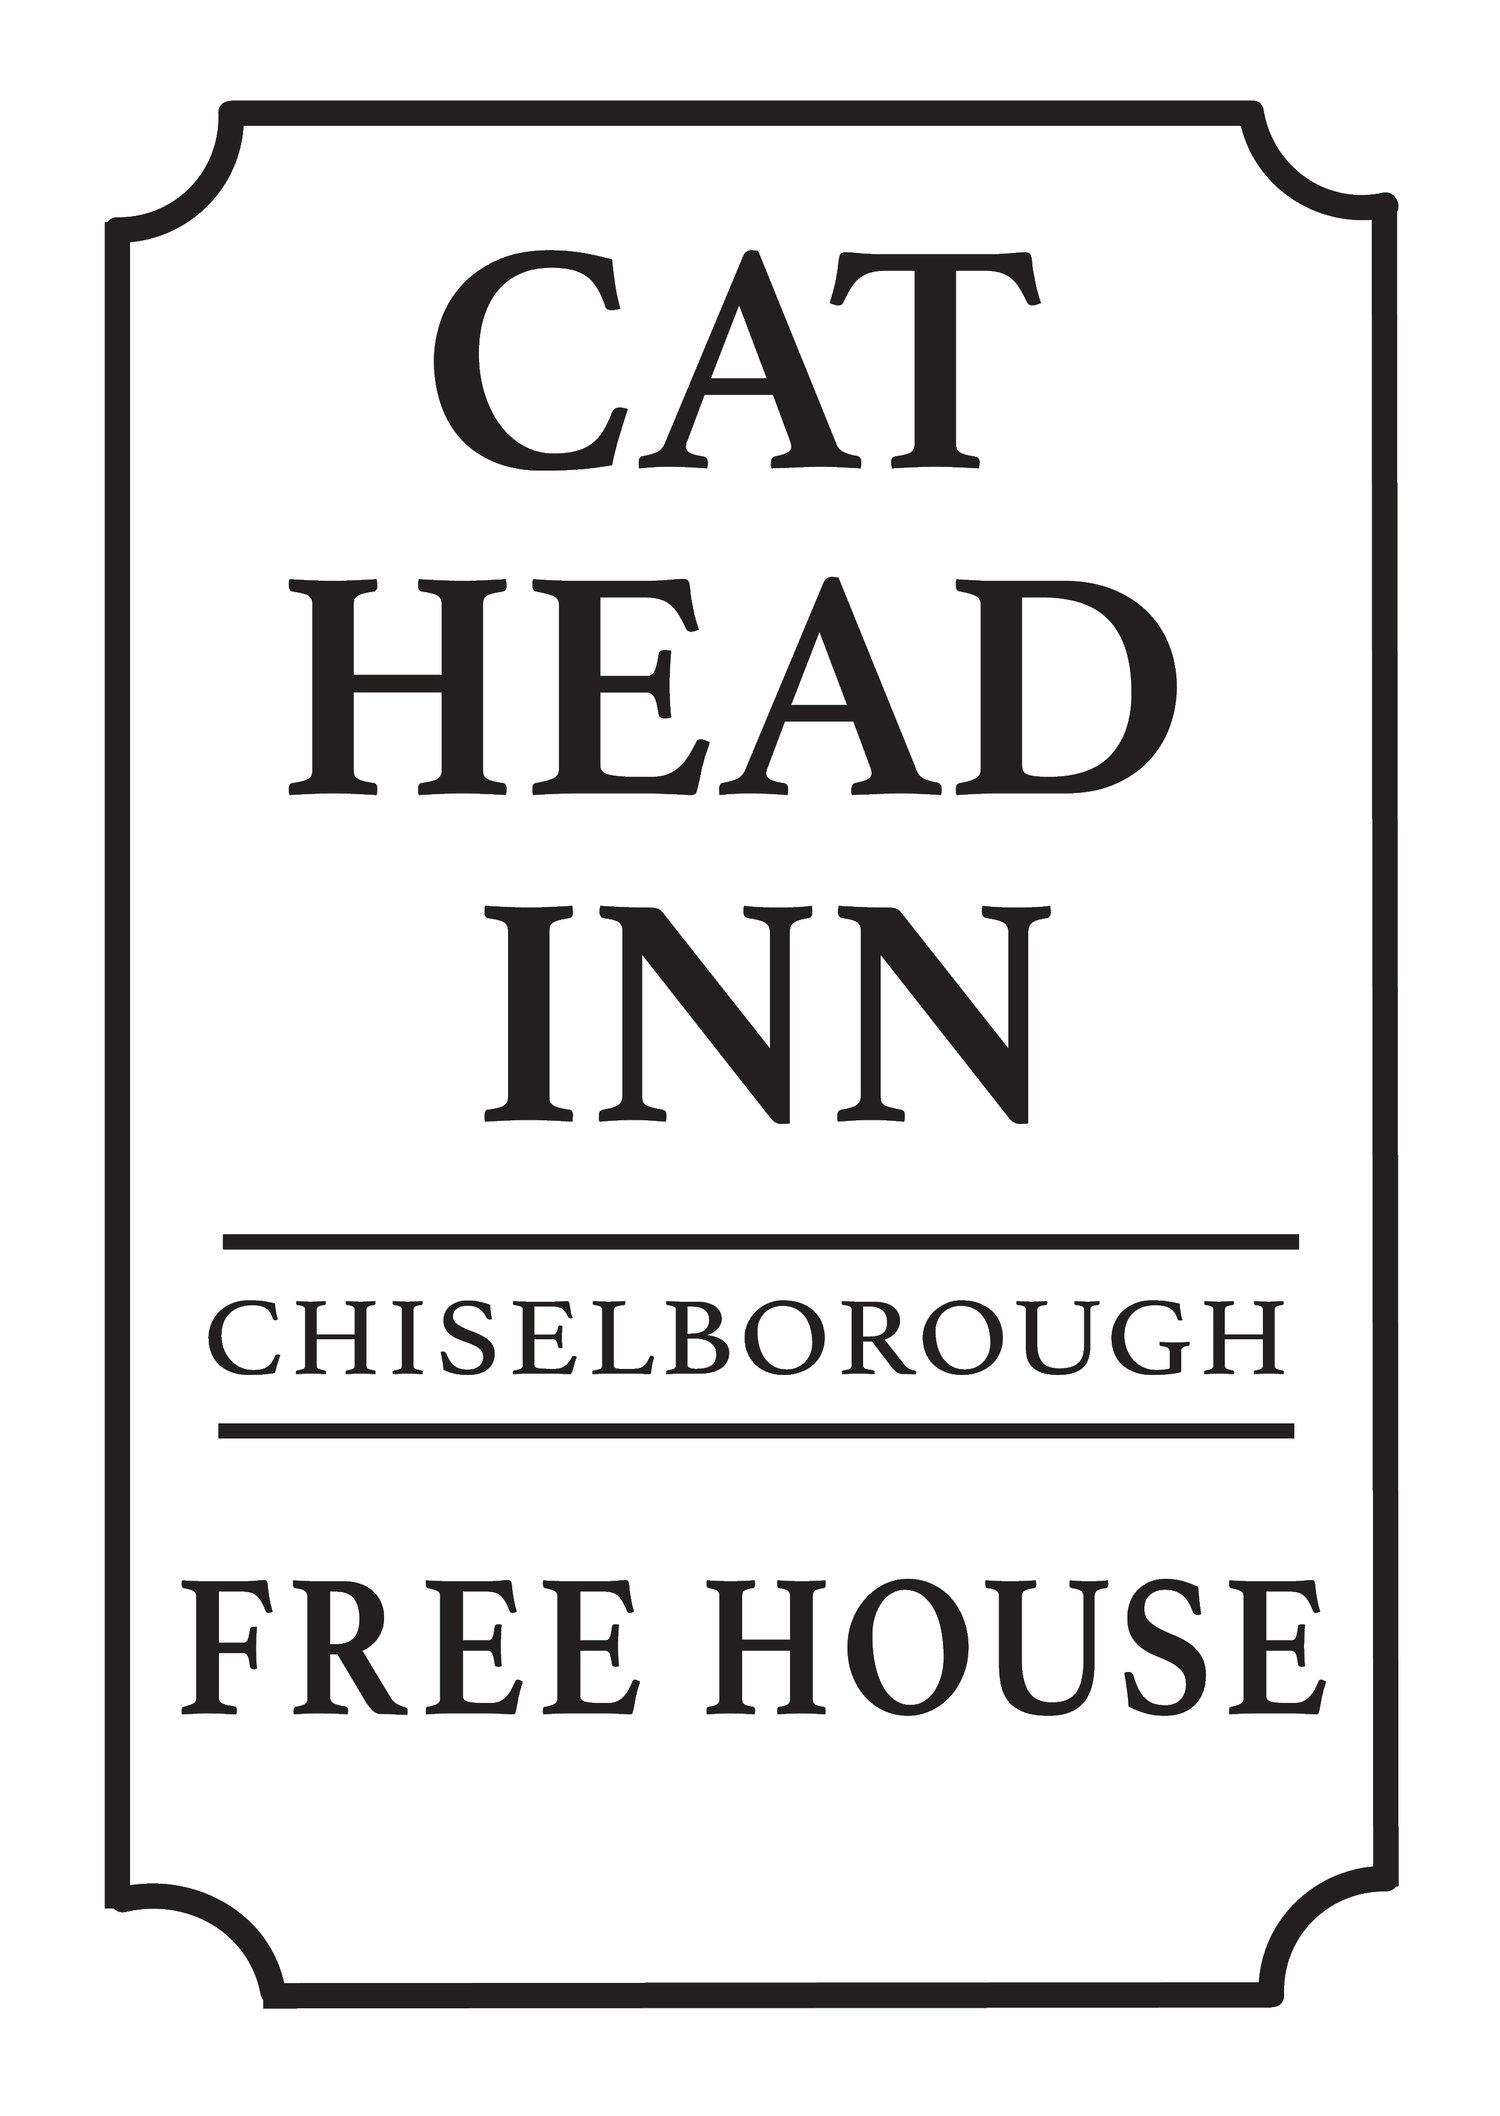 Cat Head Inn